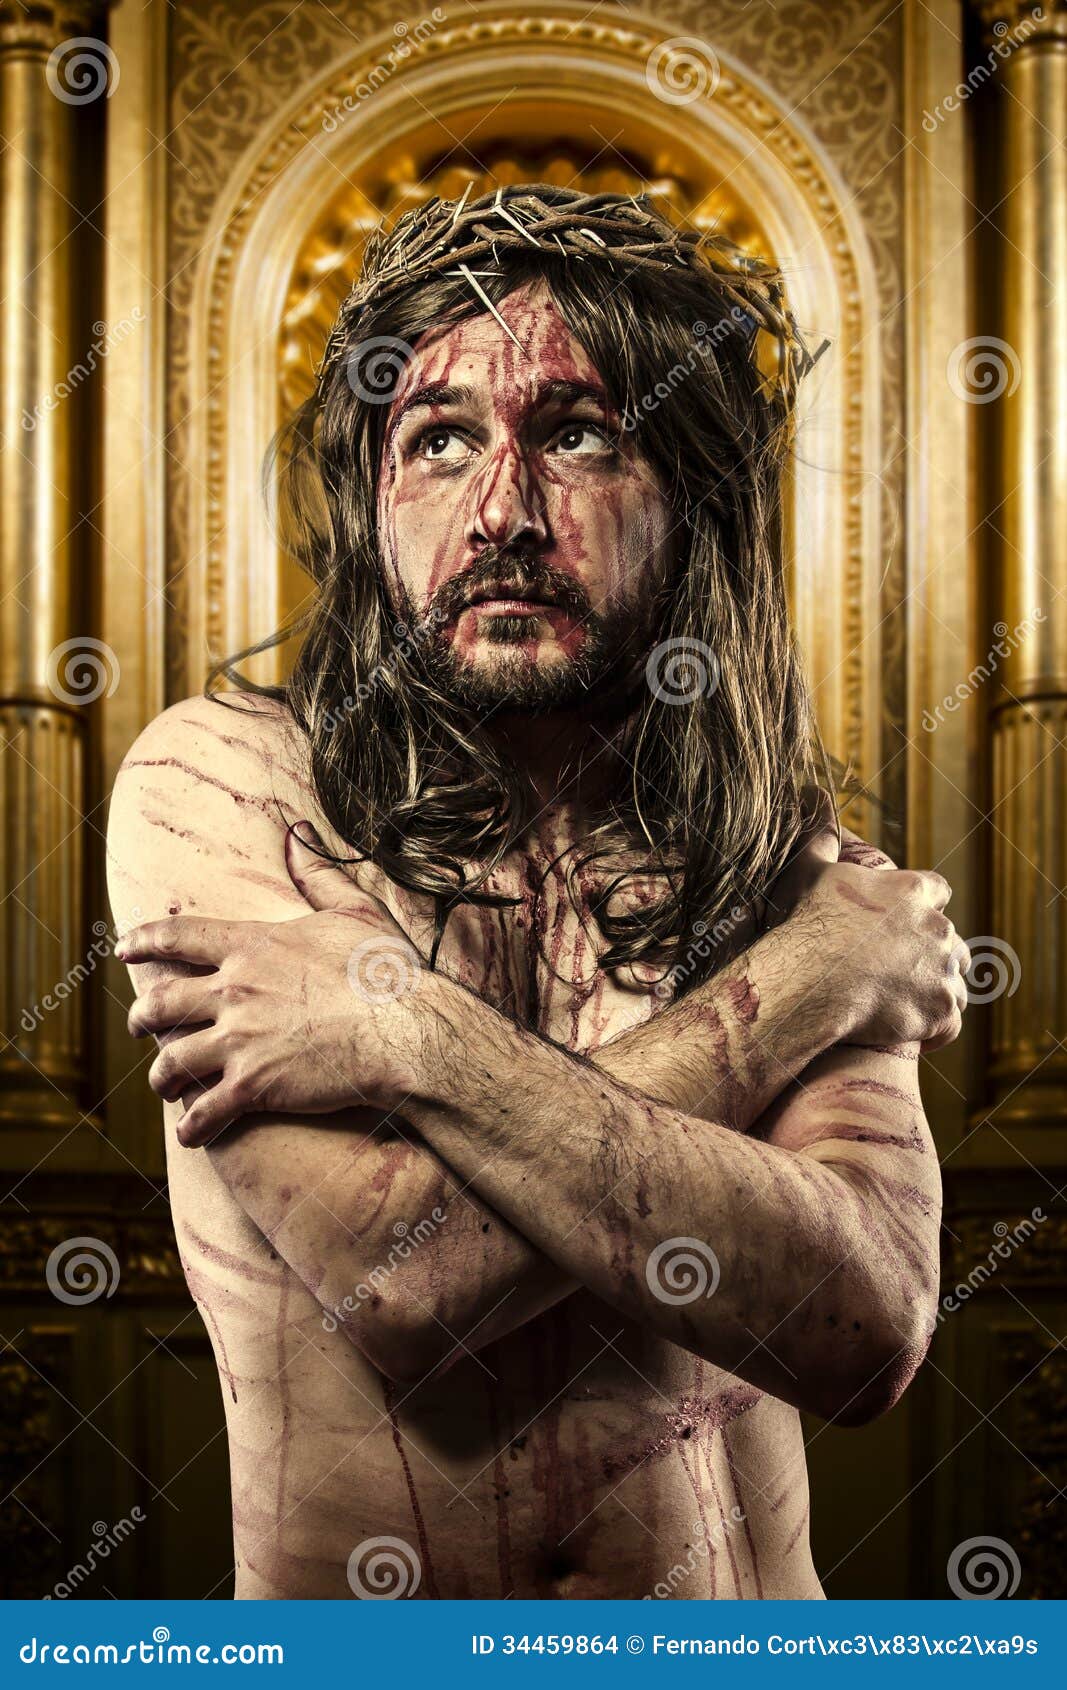 jesus christ halo golden light chapel calvary man bleeding representation passion crown thorns art 34459864